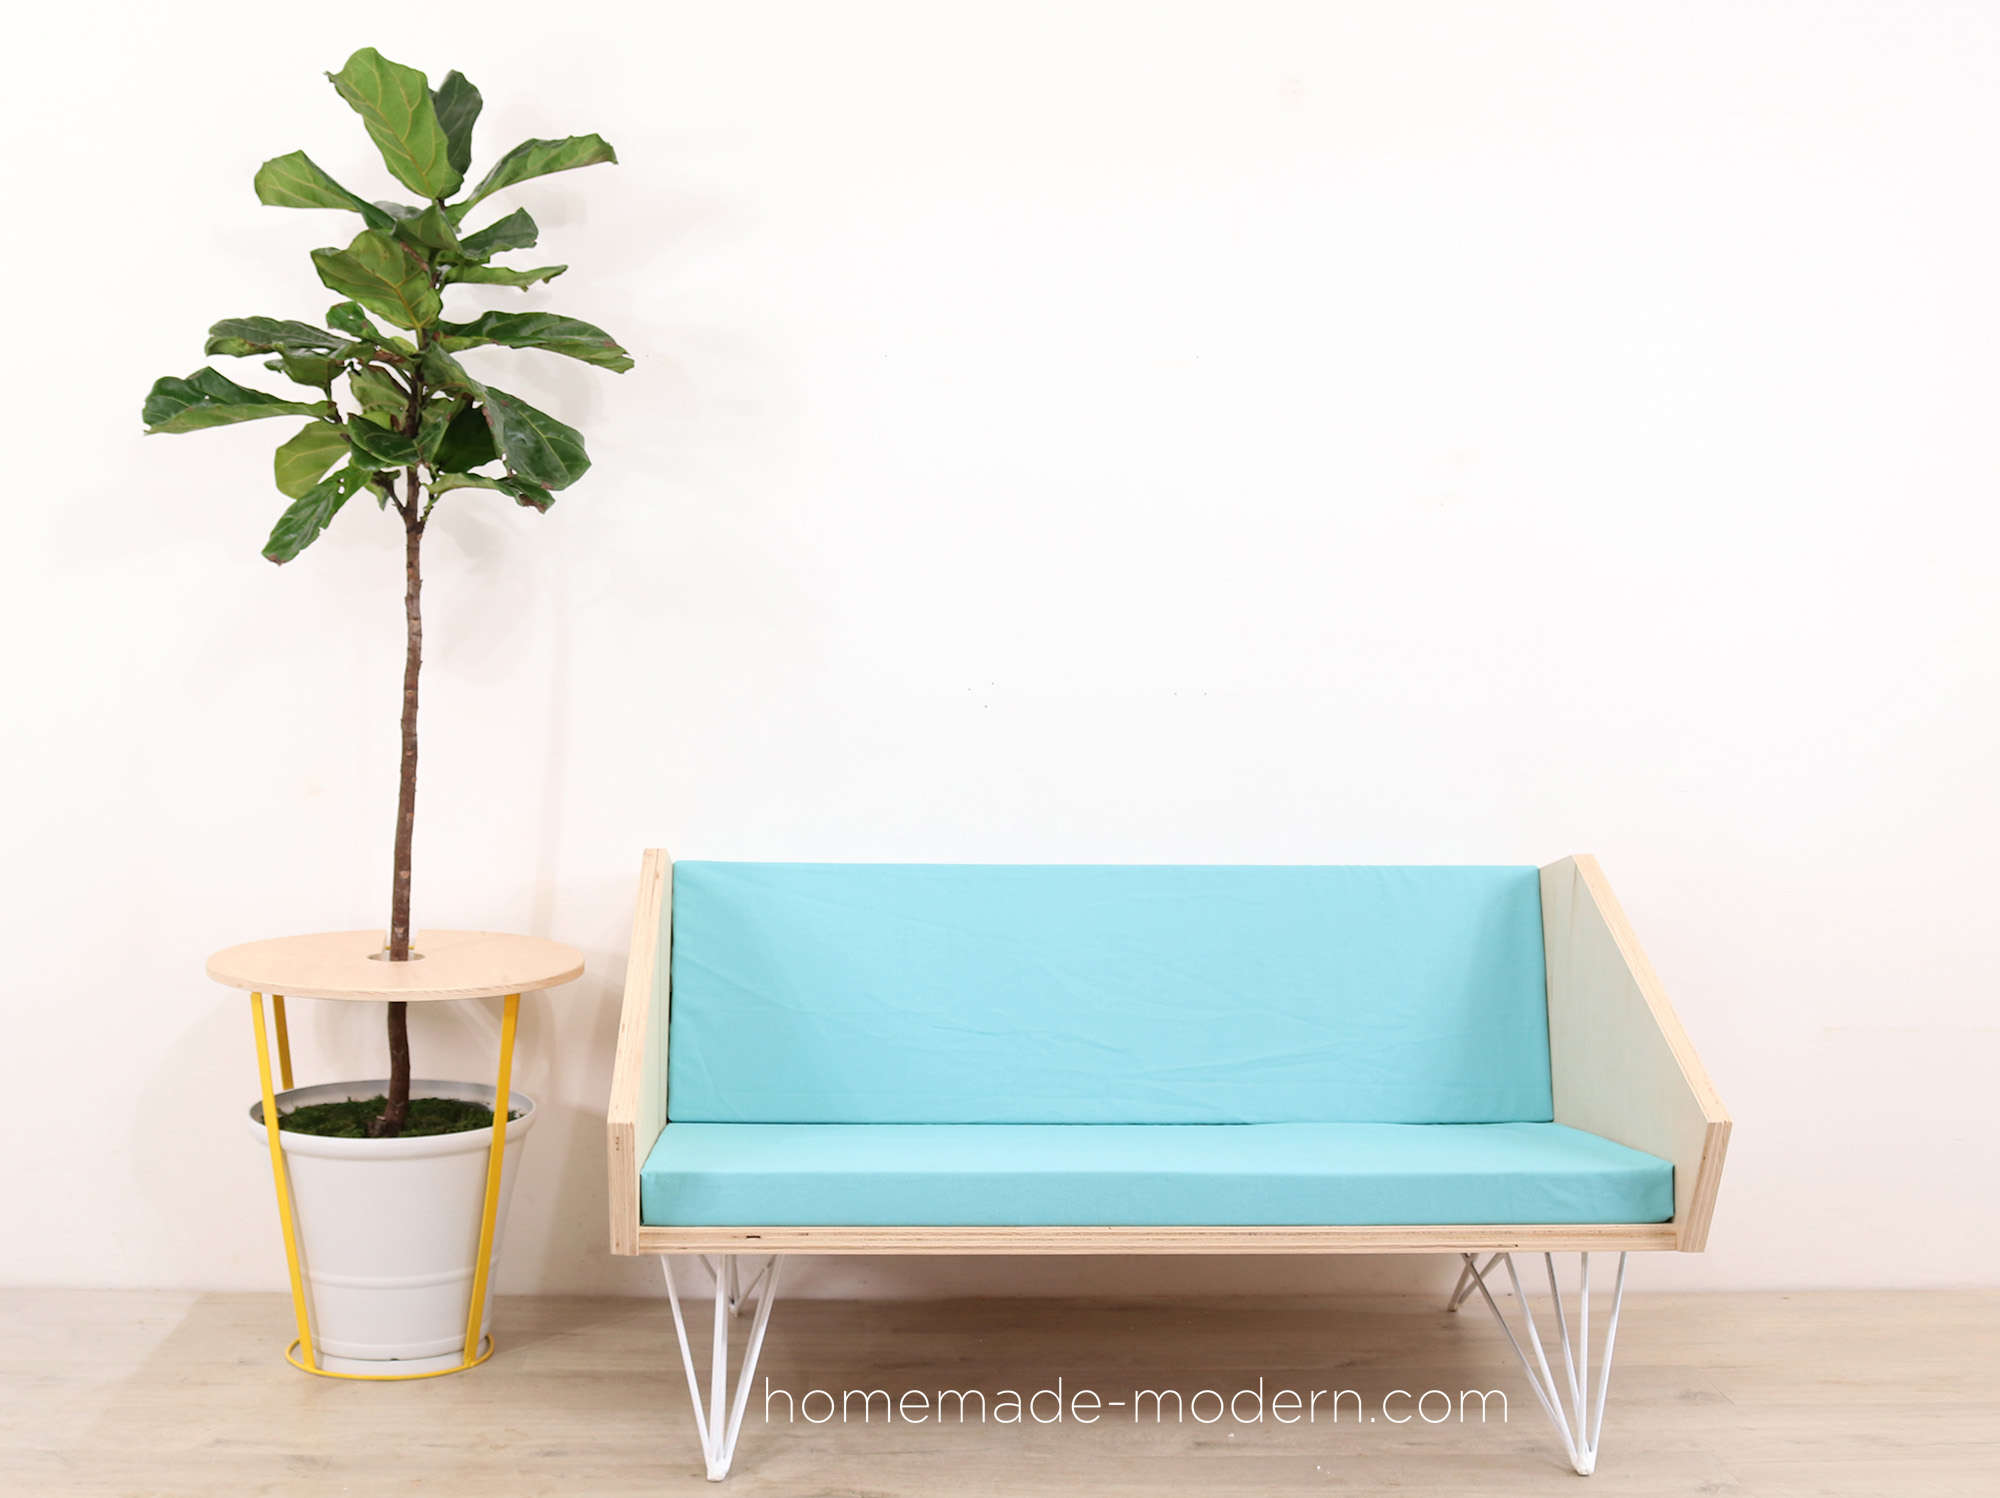 http://www.homemade-modern.com/wp-content/uploads/2019/05/plantersidetable-final.jpg